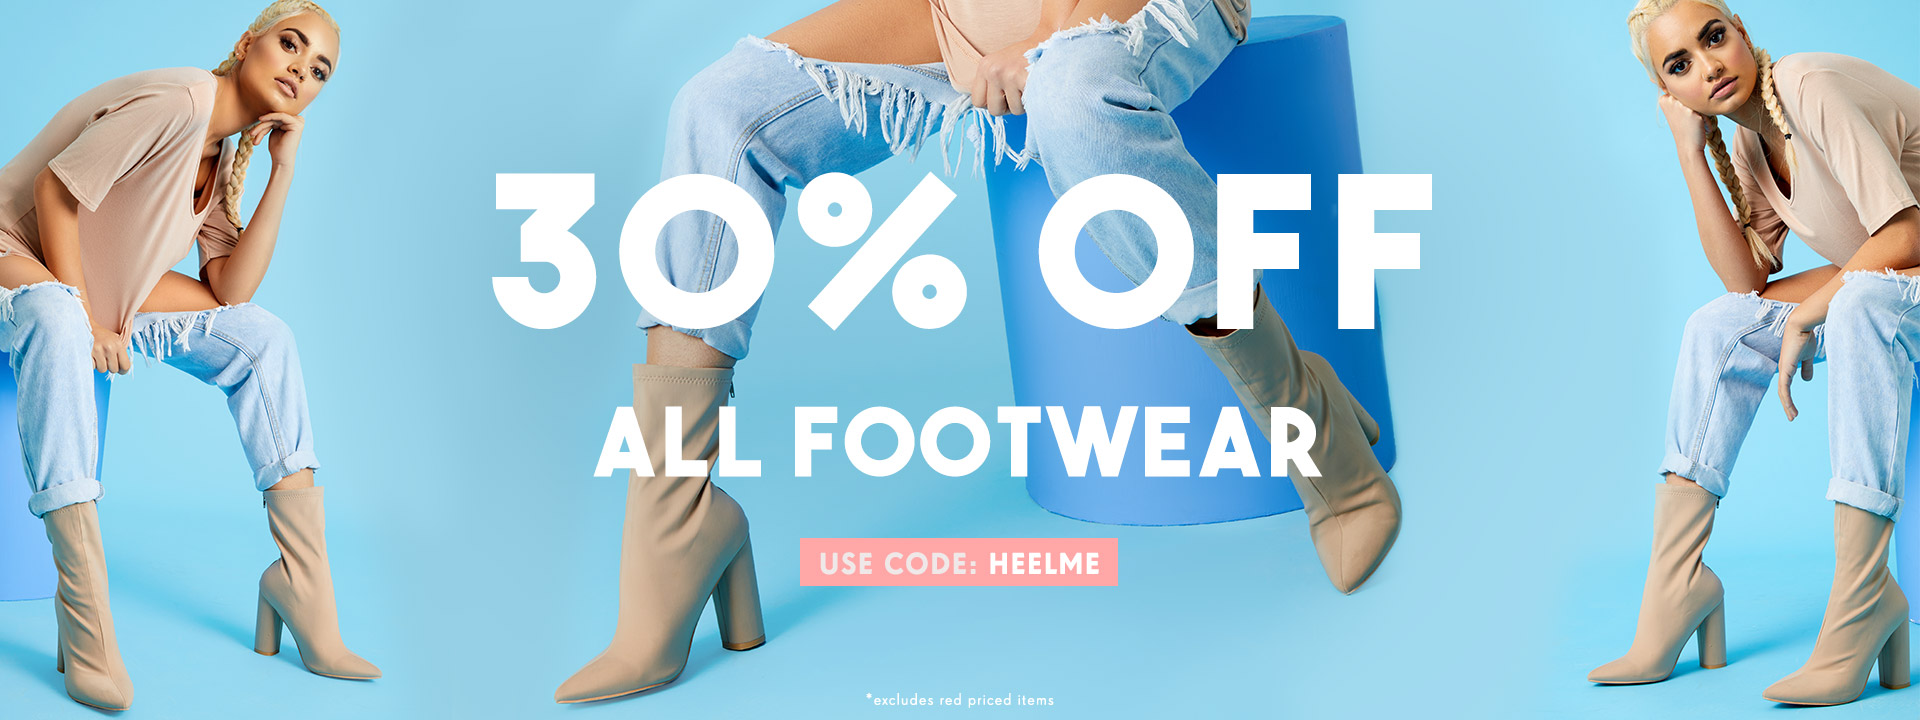 Pretty Little Thing: 30% off all footwear